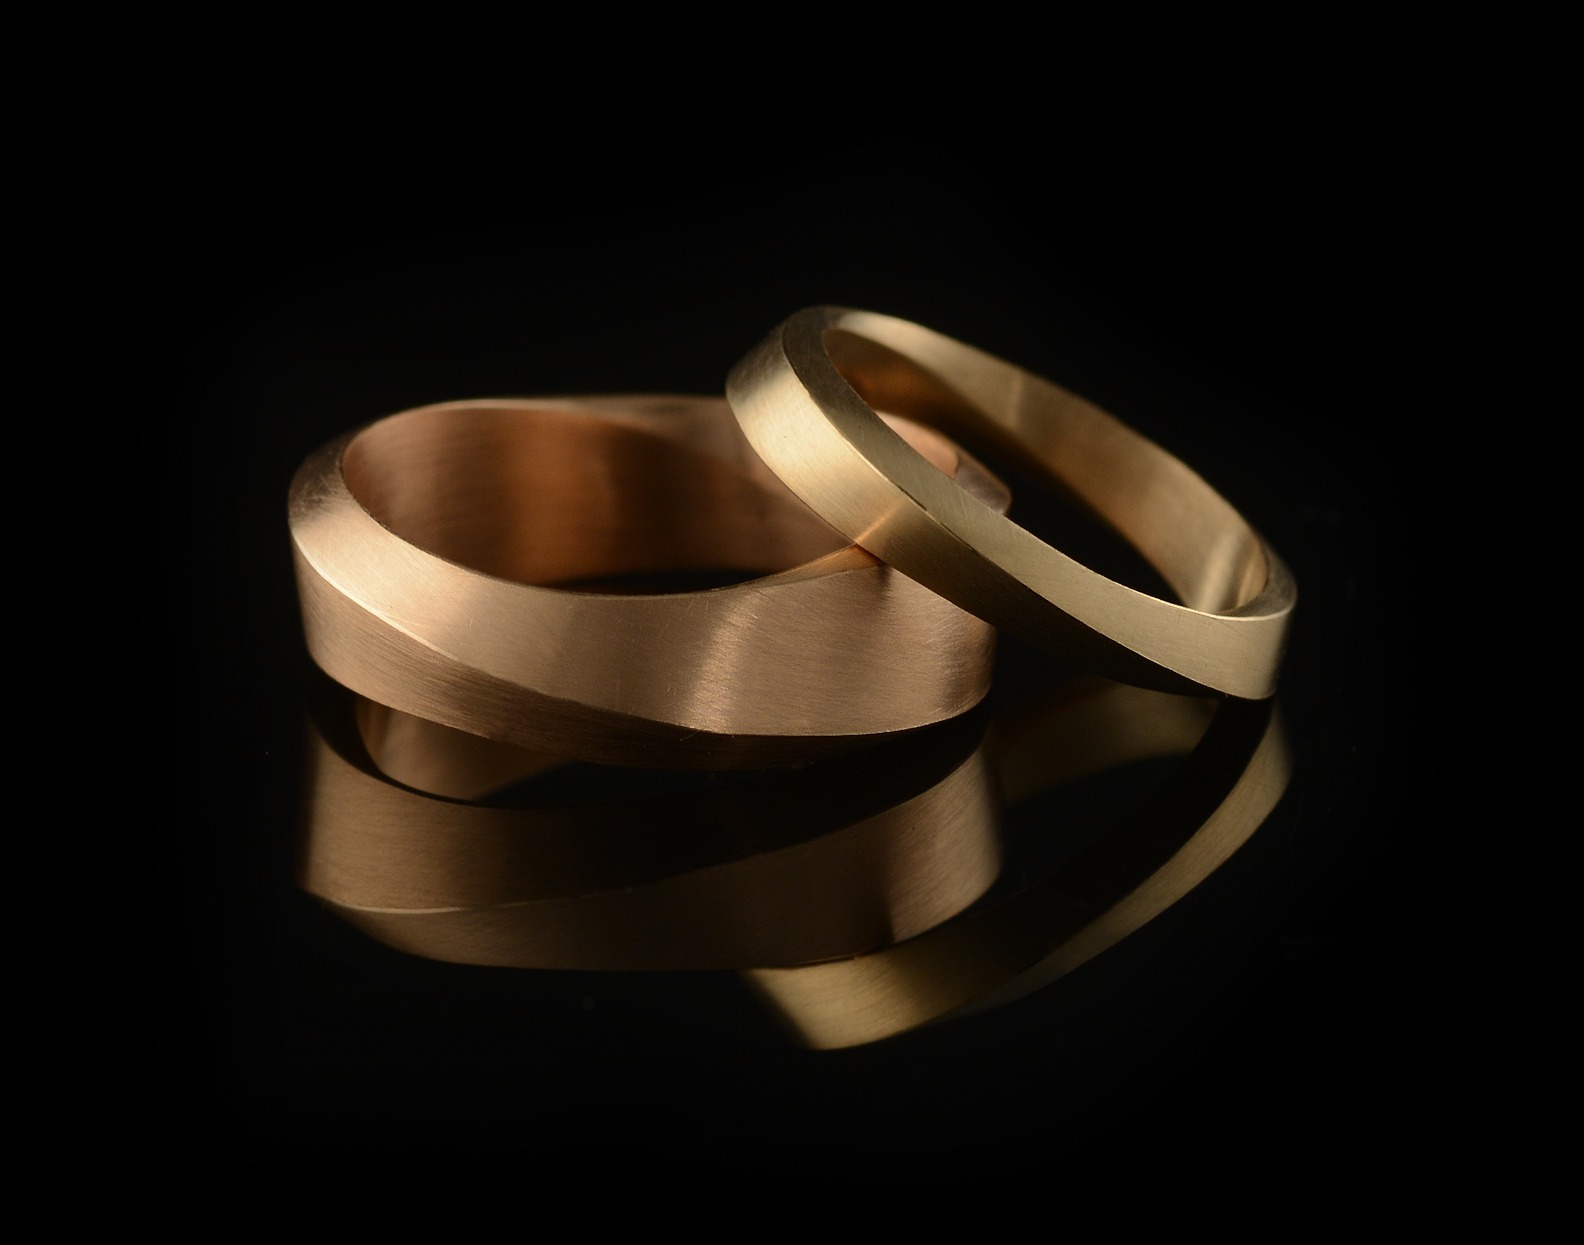 Mobius alternative modern engagement rings for men and women